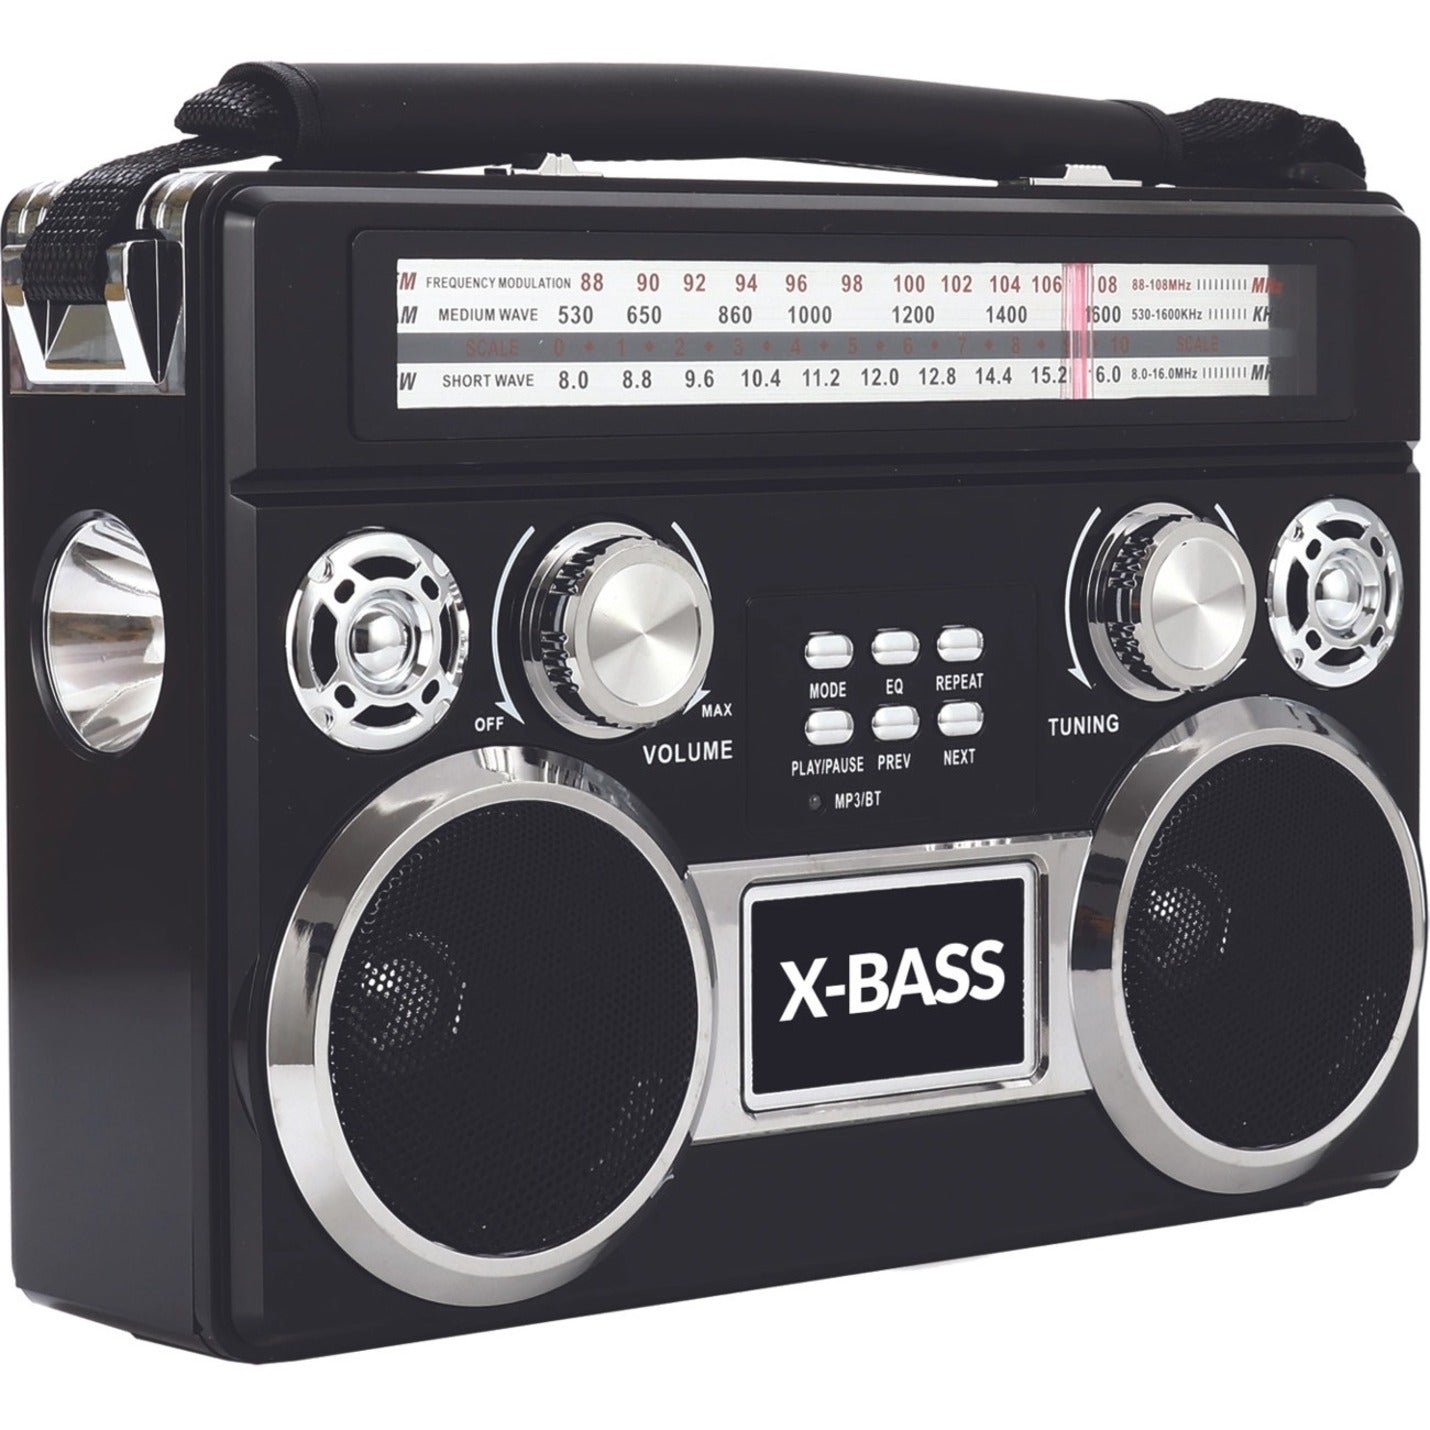 Supersonic SC-1097BT- Black 3 Band Radio with Bluetooth and Flashlight, Portable Analog Radio Tuner